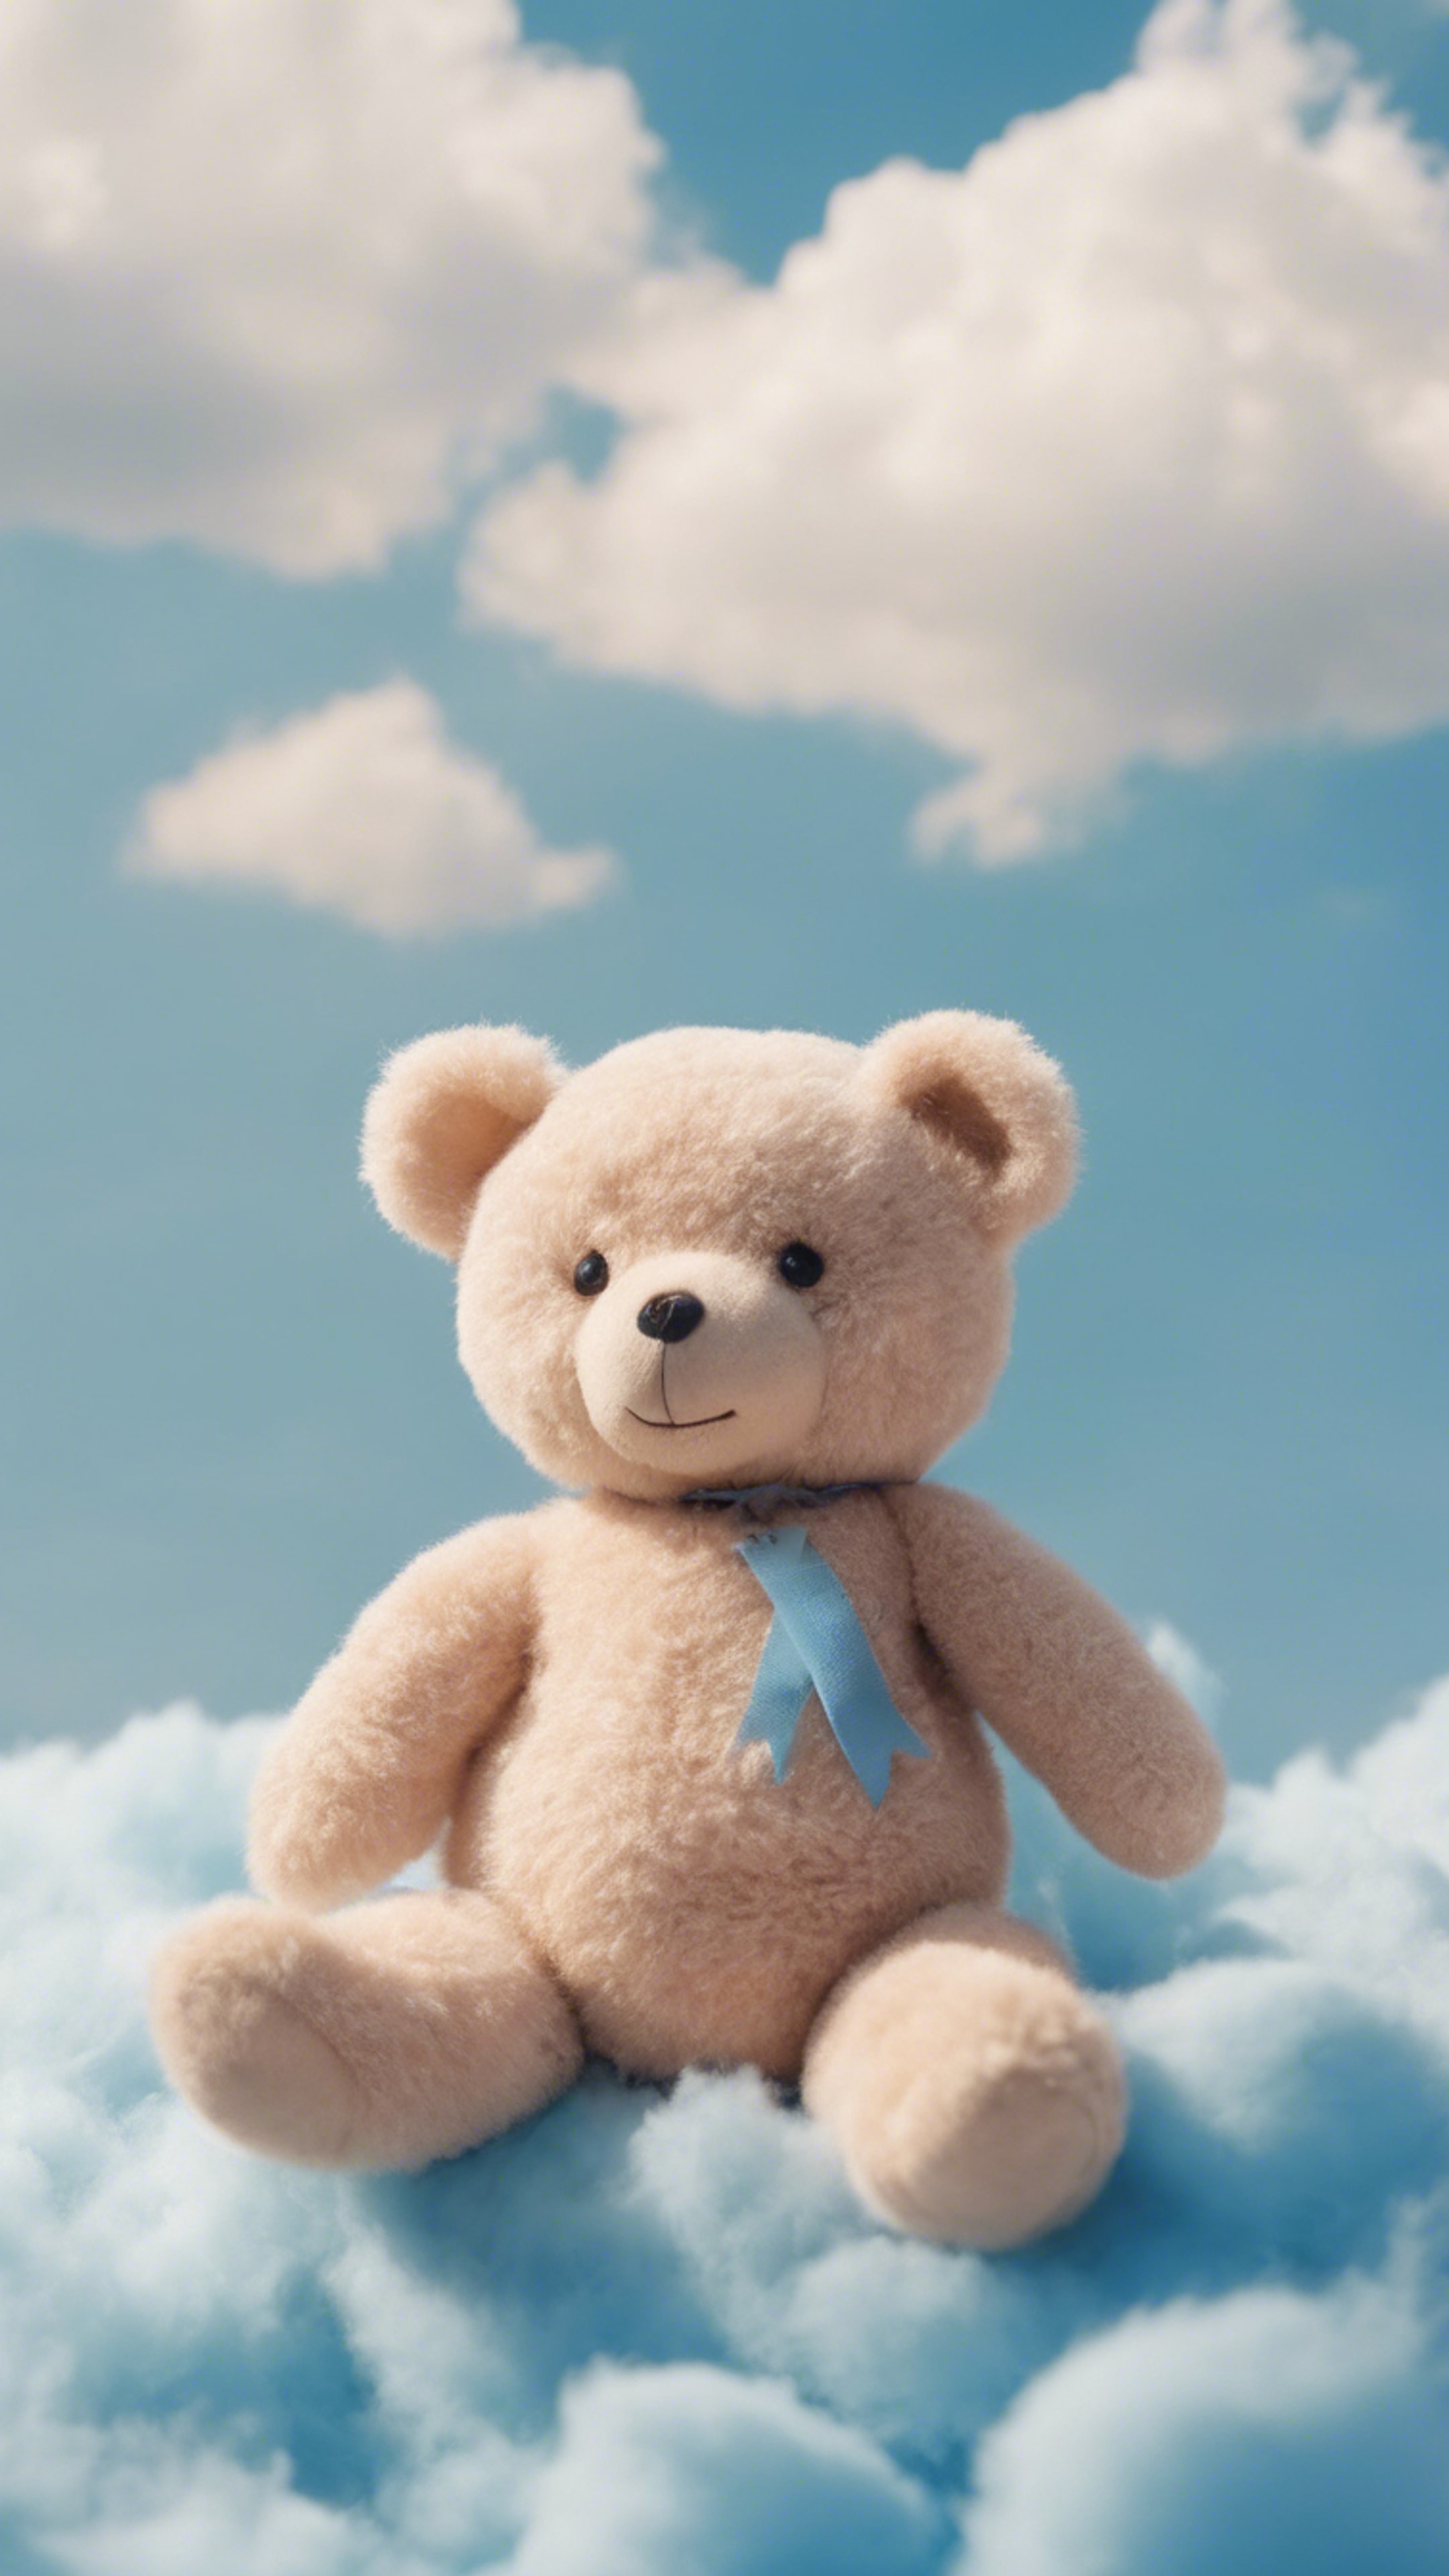 A kawaii beige teddy bear sitting on a soft fluffy cloud in a blue sky. Tapeta[56112c47d15a43519872]